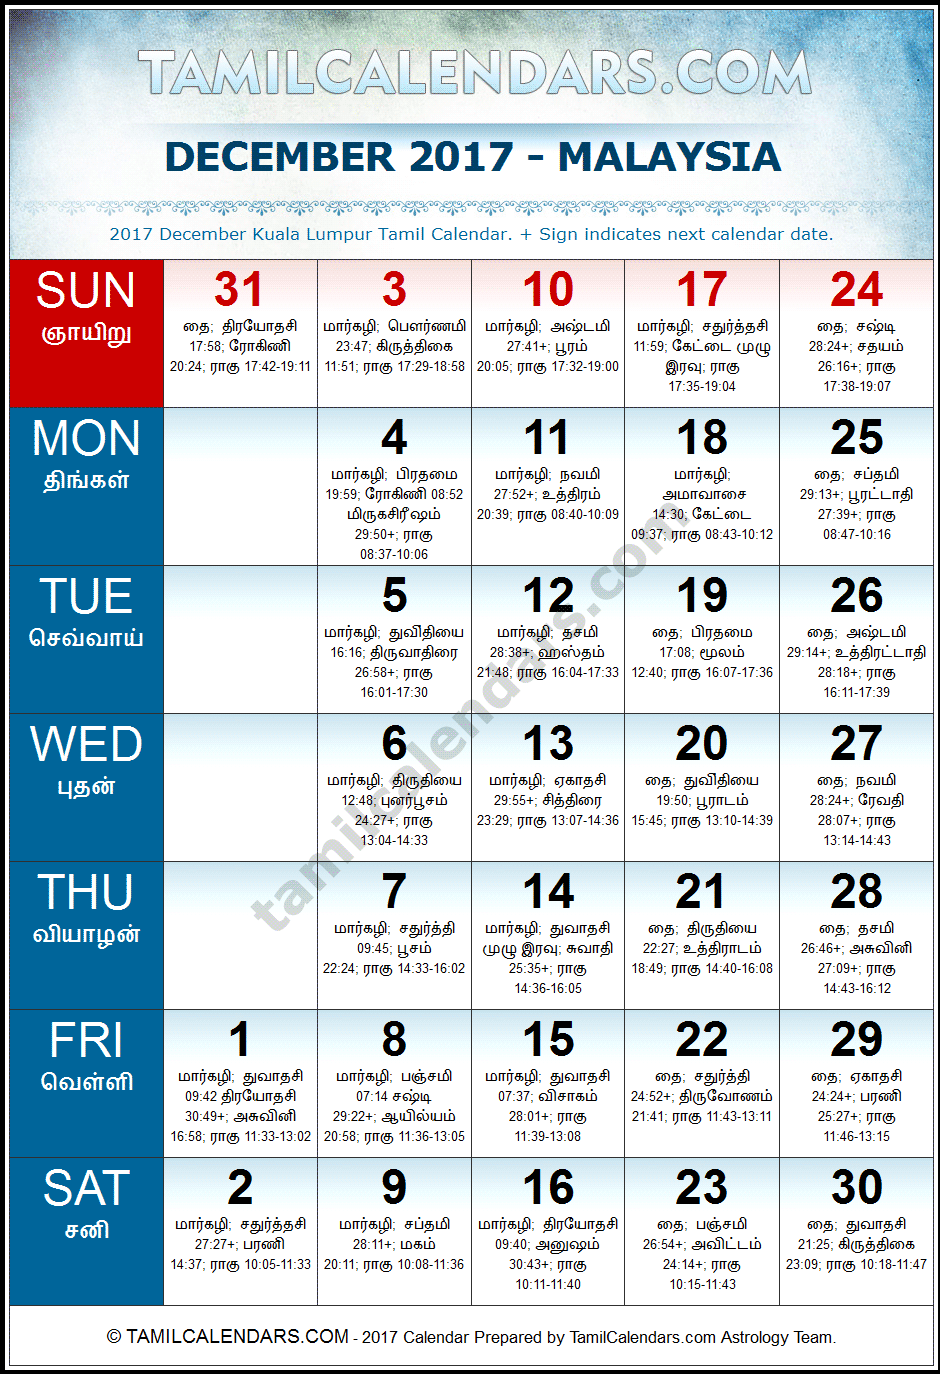 December 2017 Tamil Calendar for Malaysia (Kuala Lumpur)